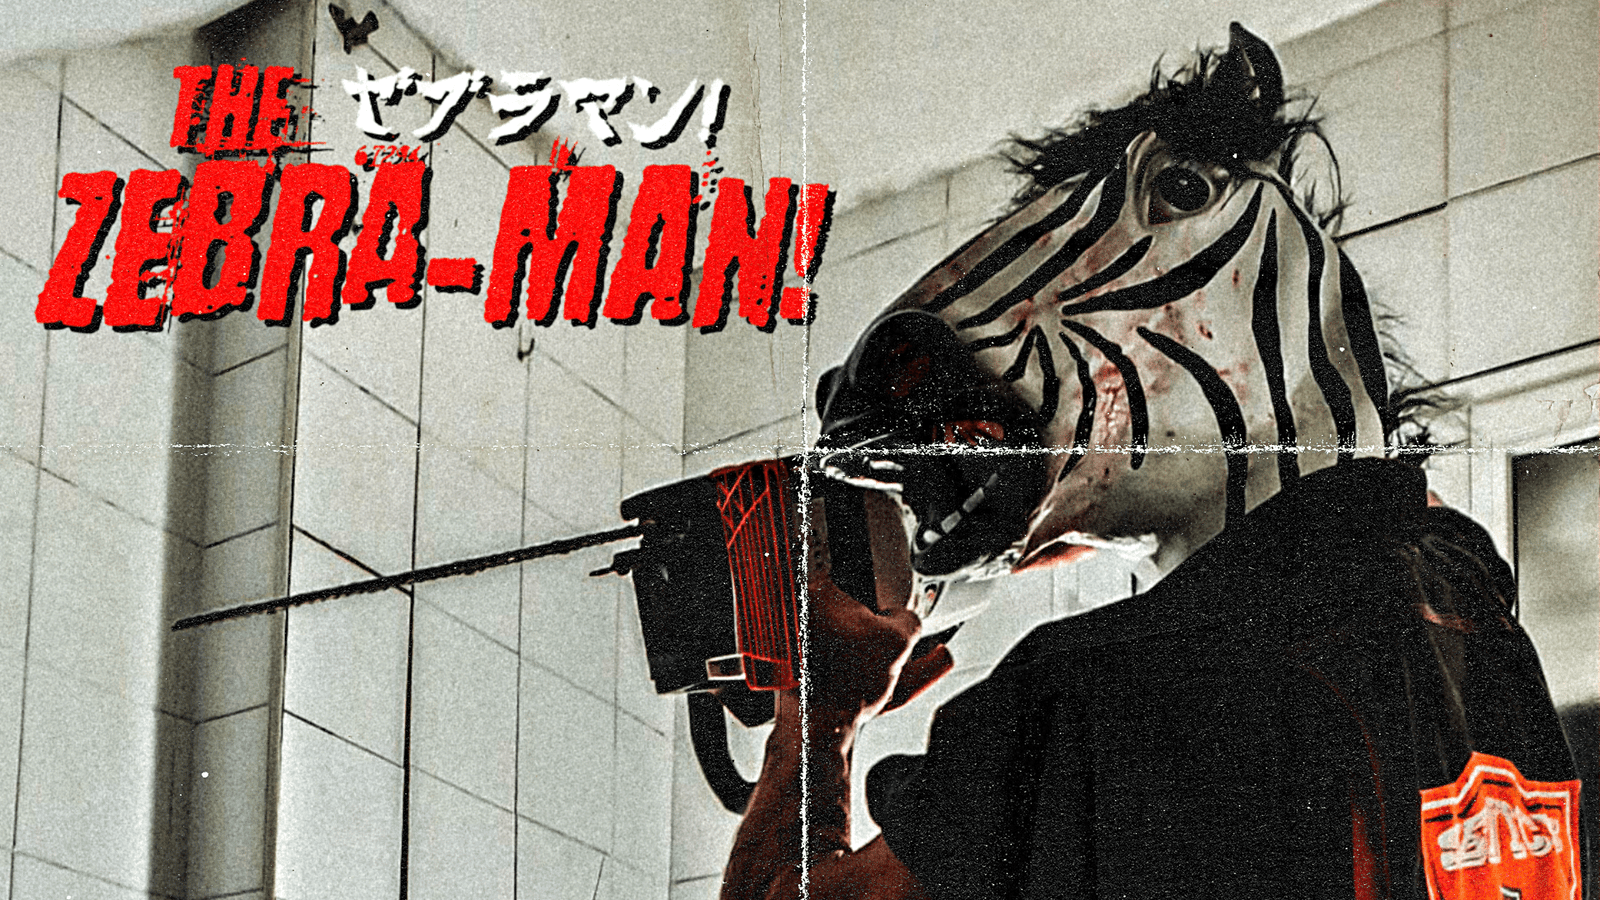 The Zebra-Man : La vengeance porte des rayures